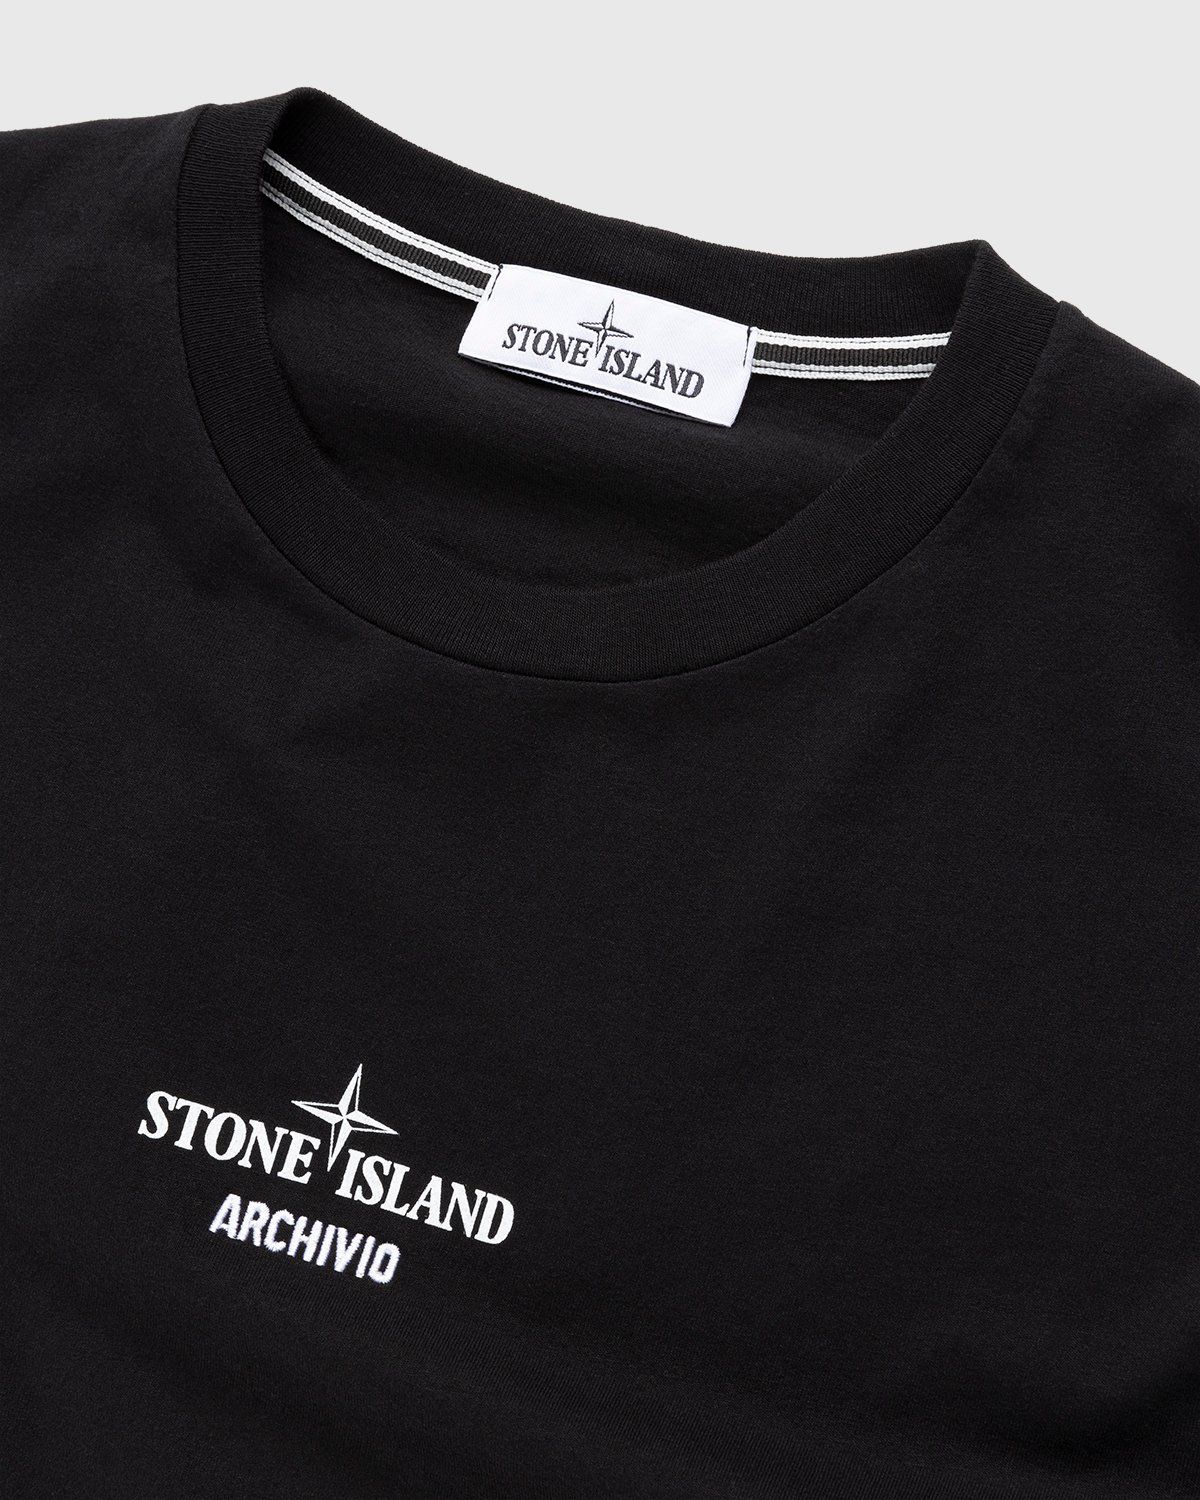 Stone Island – 2NS91 Garment-Dyed Archivio T-Shirt Black  - Image 6